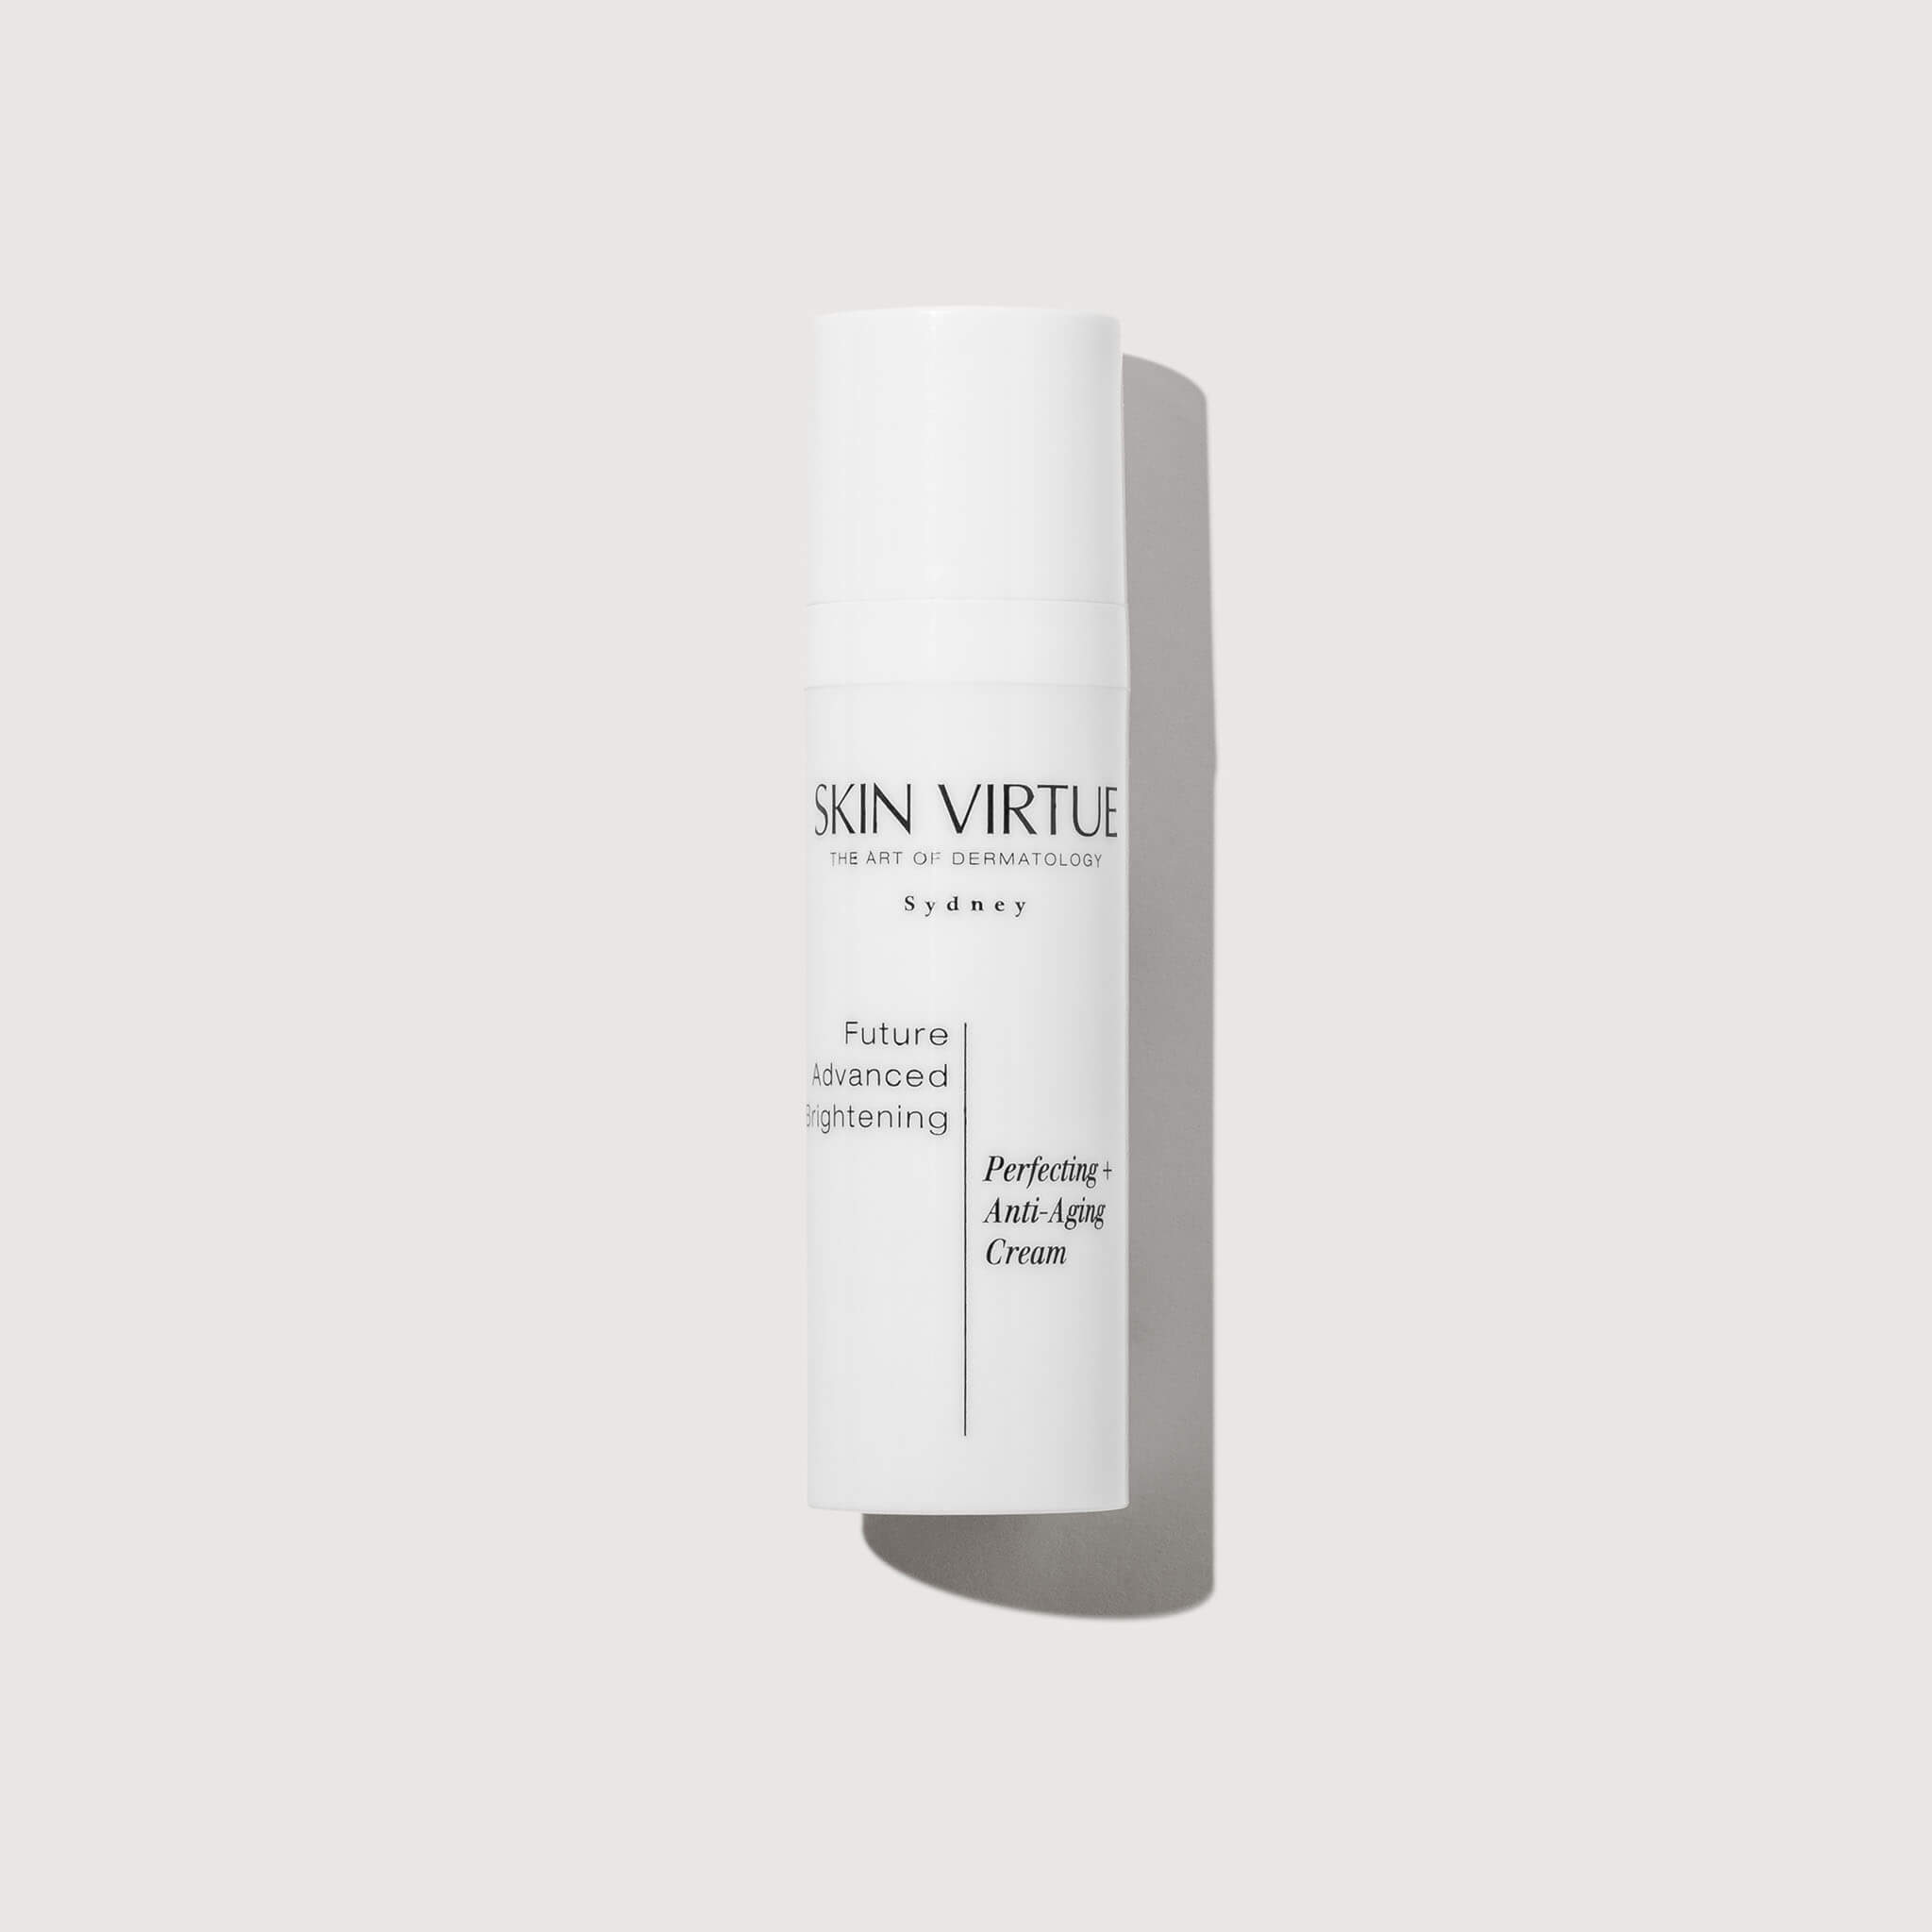 Skin Virtue bottle cosmetic australia beauty dermatology photo instagram